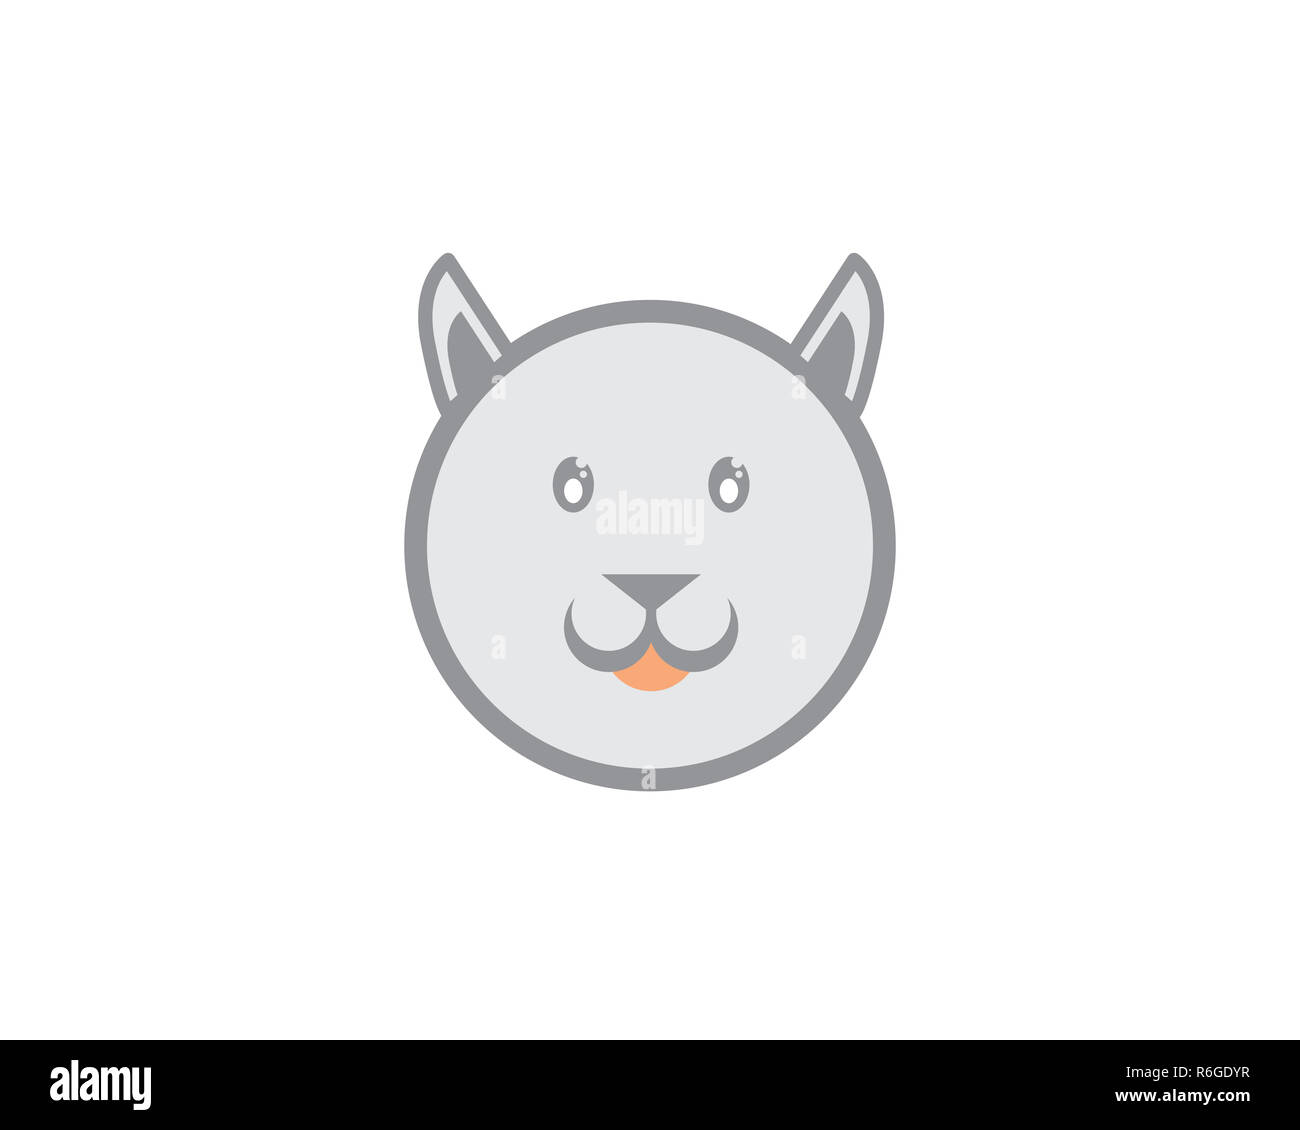 cat logo Stock Photo